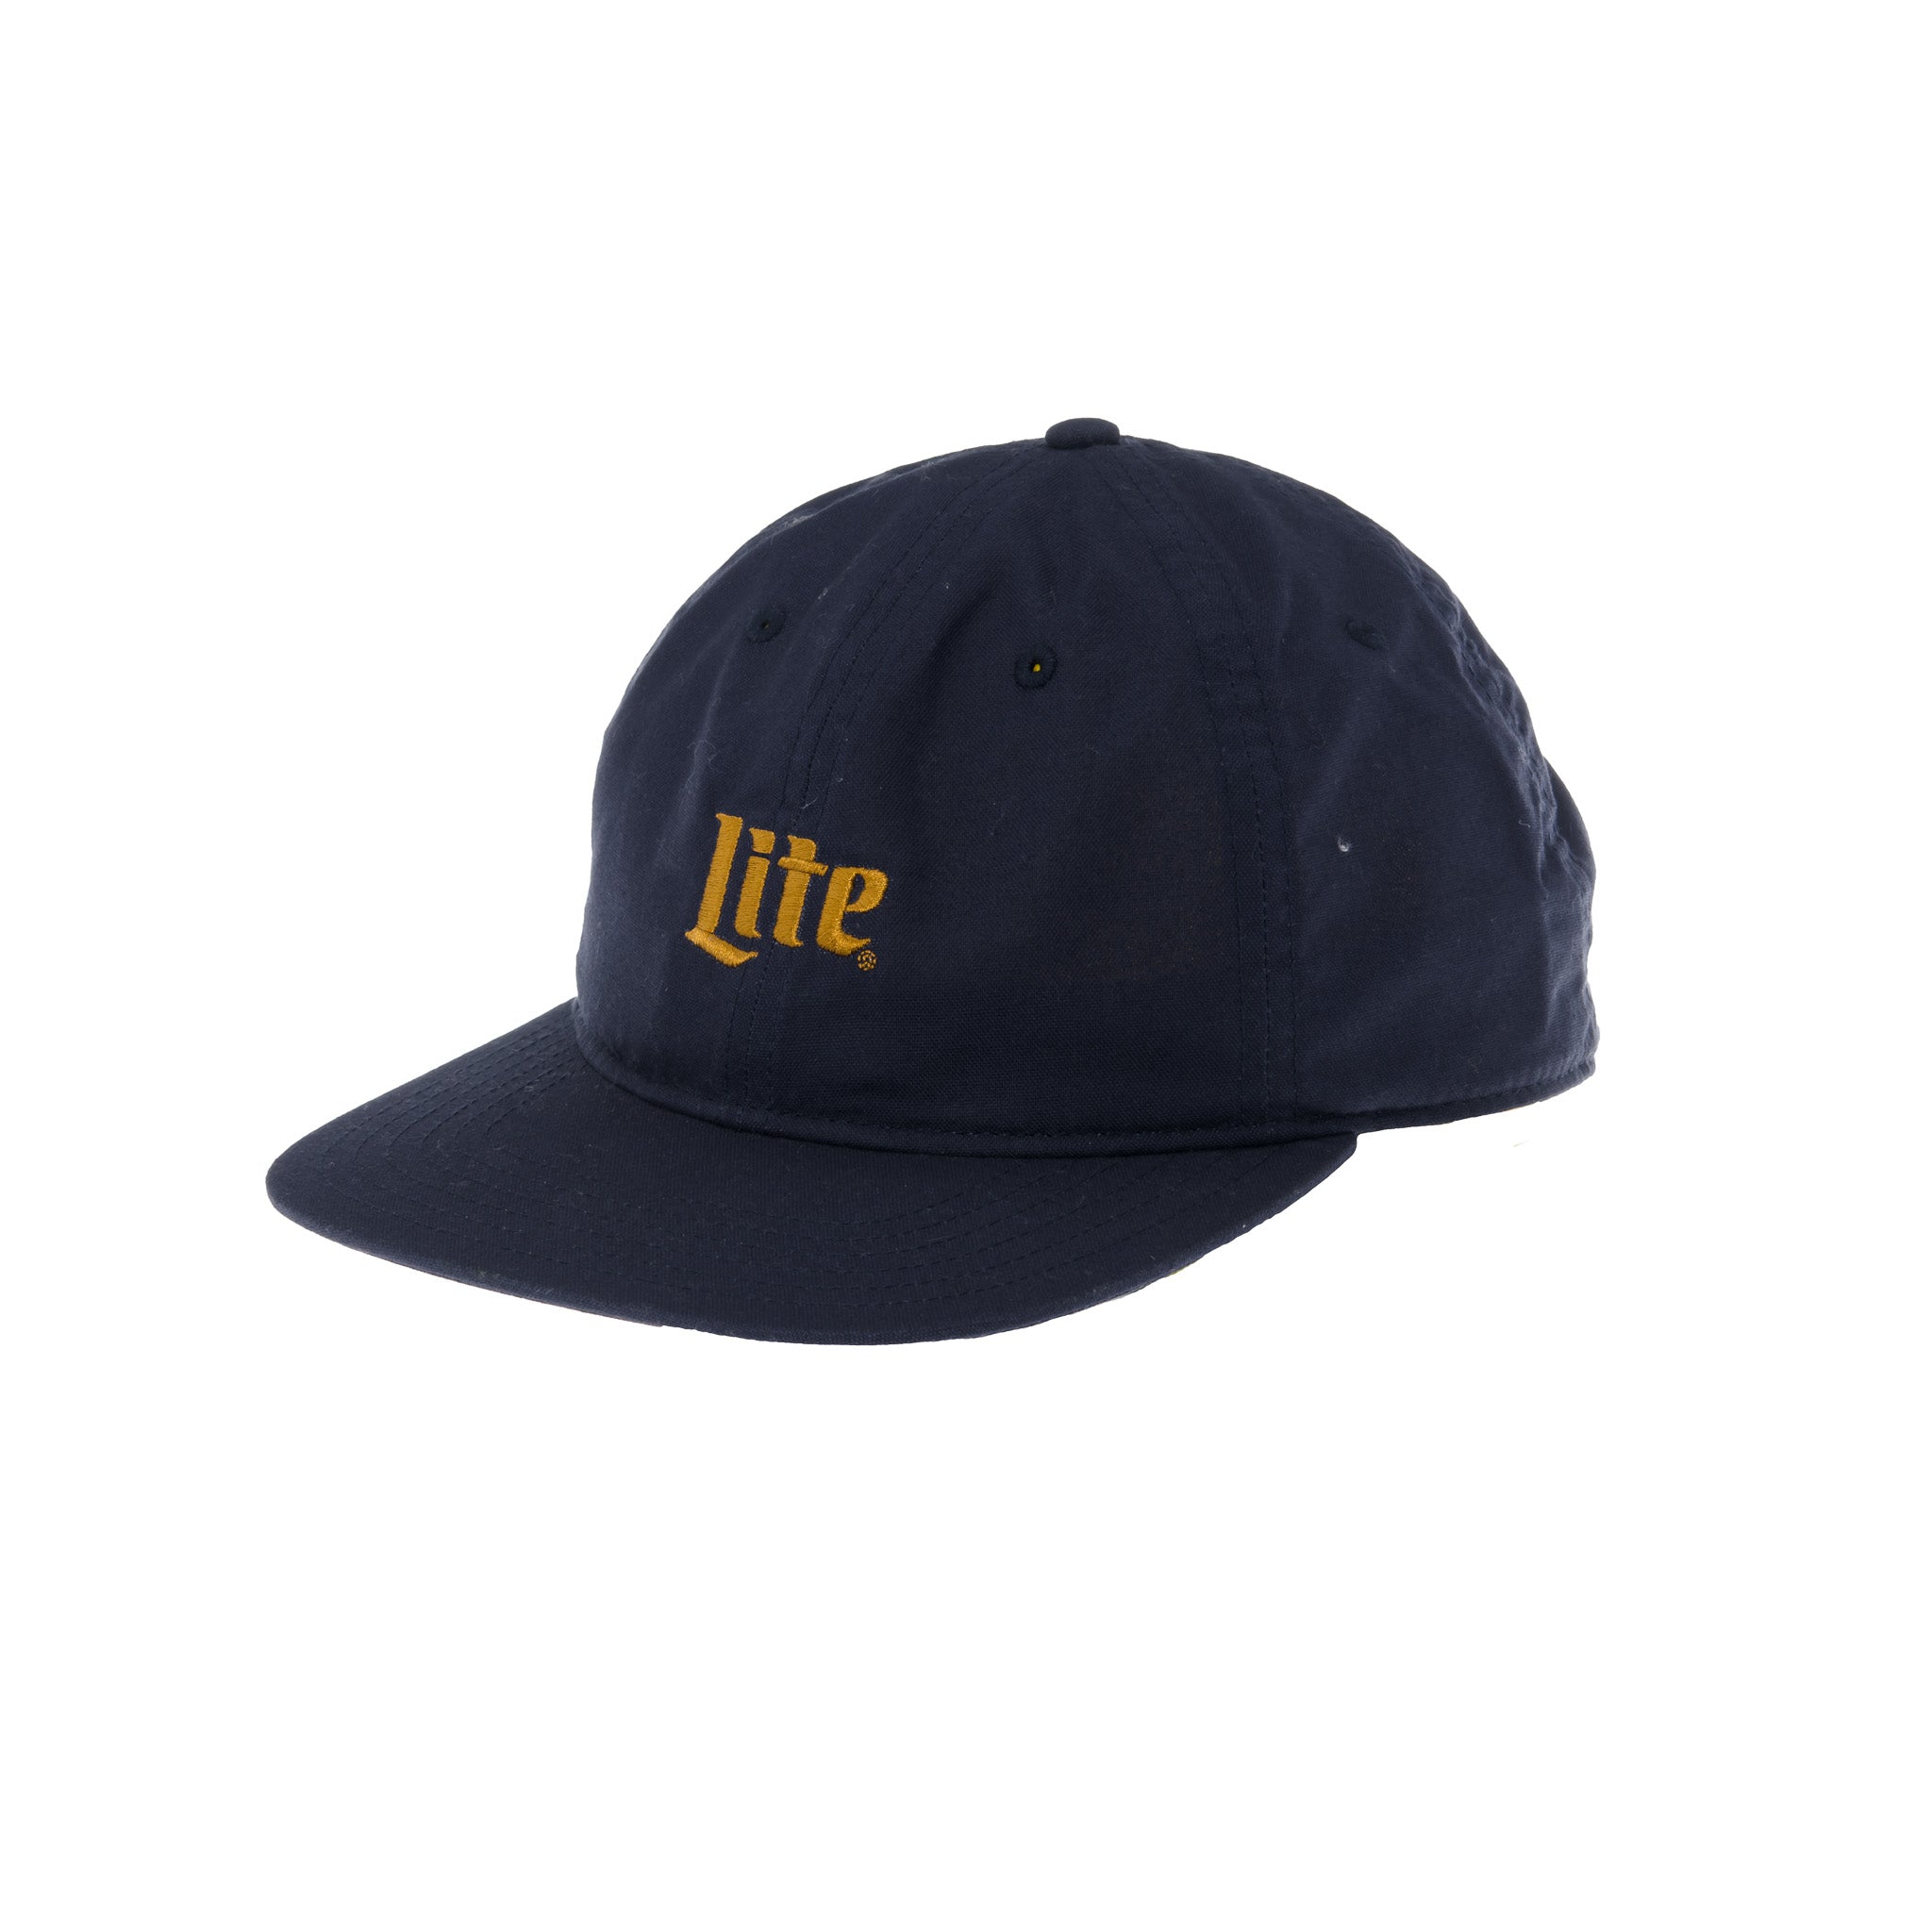 HATS – Miller Lite Shop